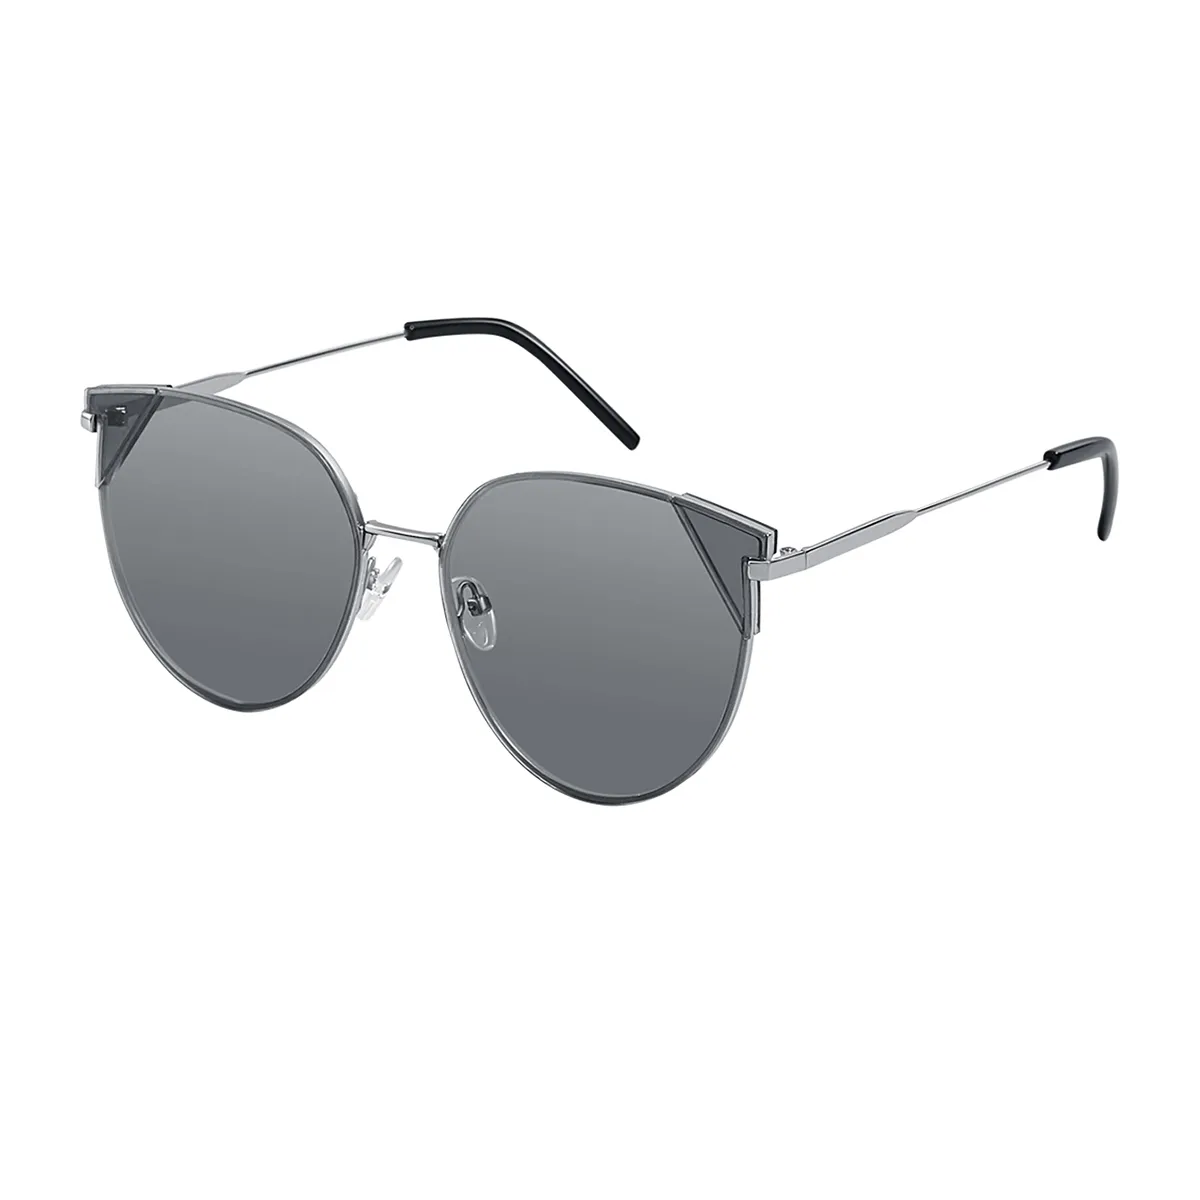 Helen - Cat-eye Silver/1 Sunglasses for Women